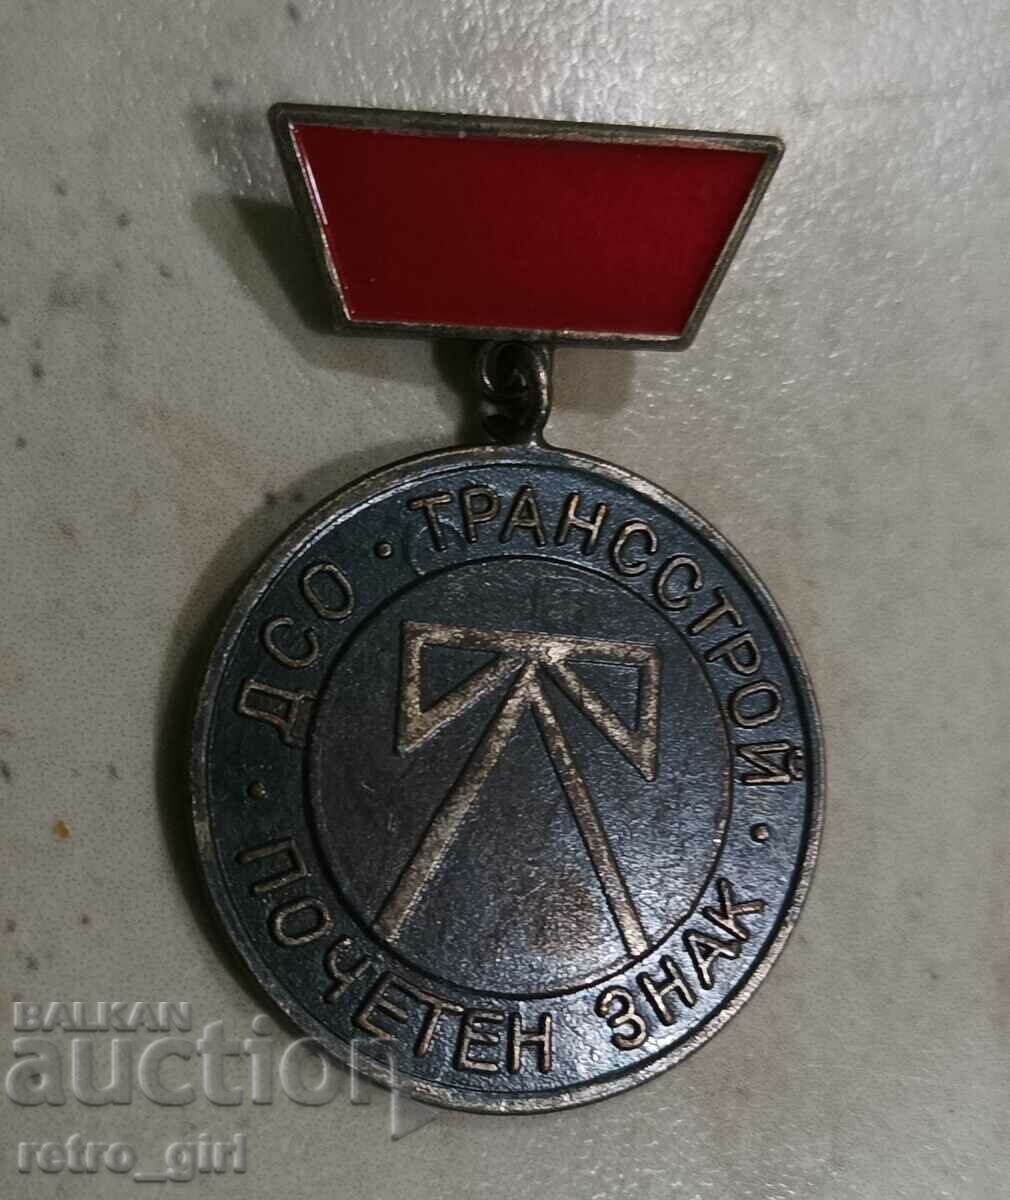 I am selling an old award badge, a badge!